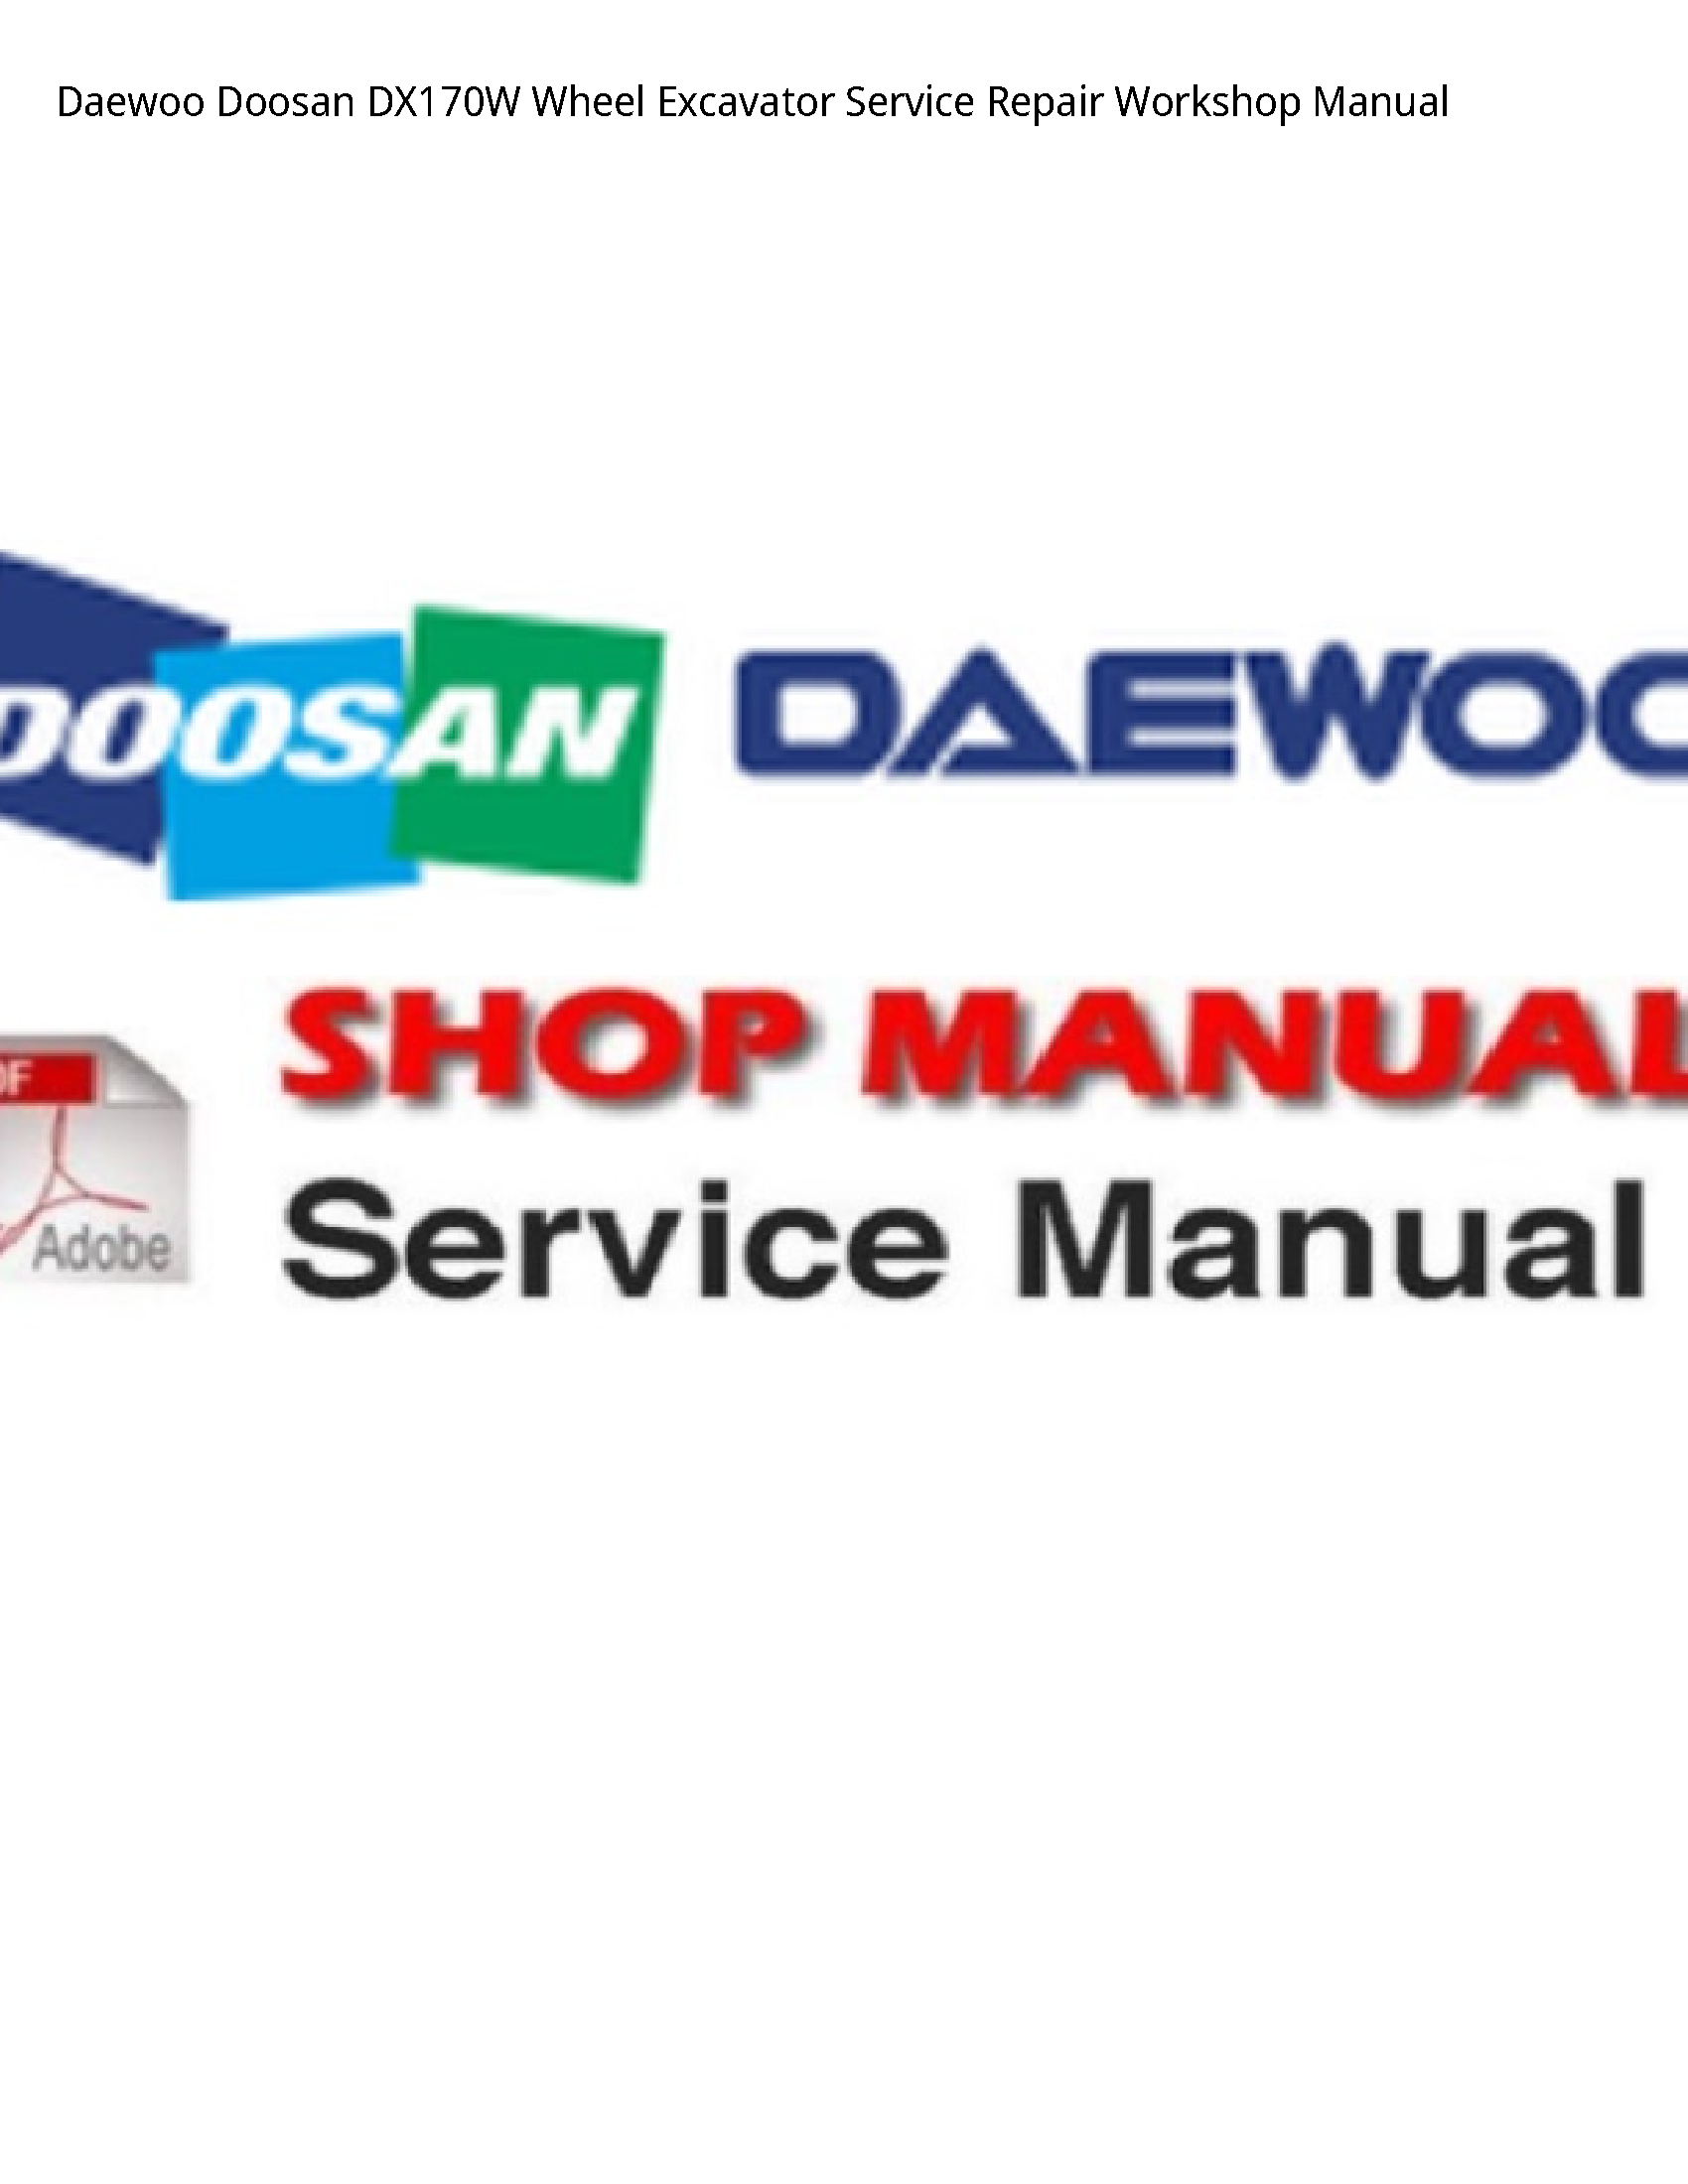 Daewoo Doosan DX170W Wheel Excavator manual